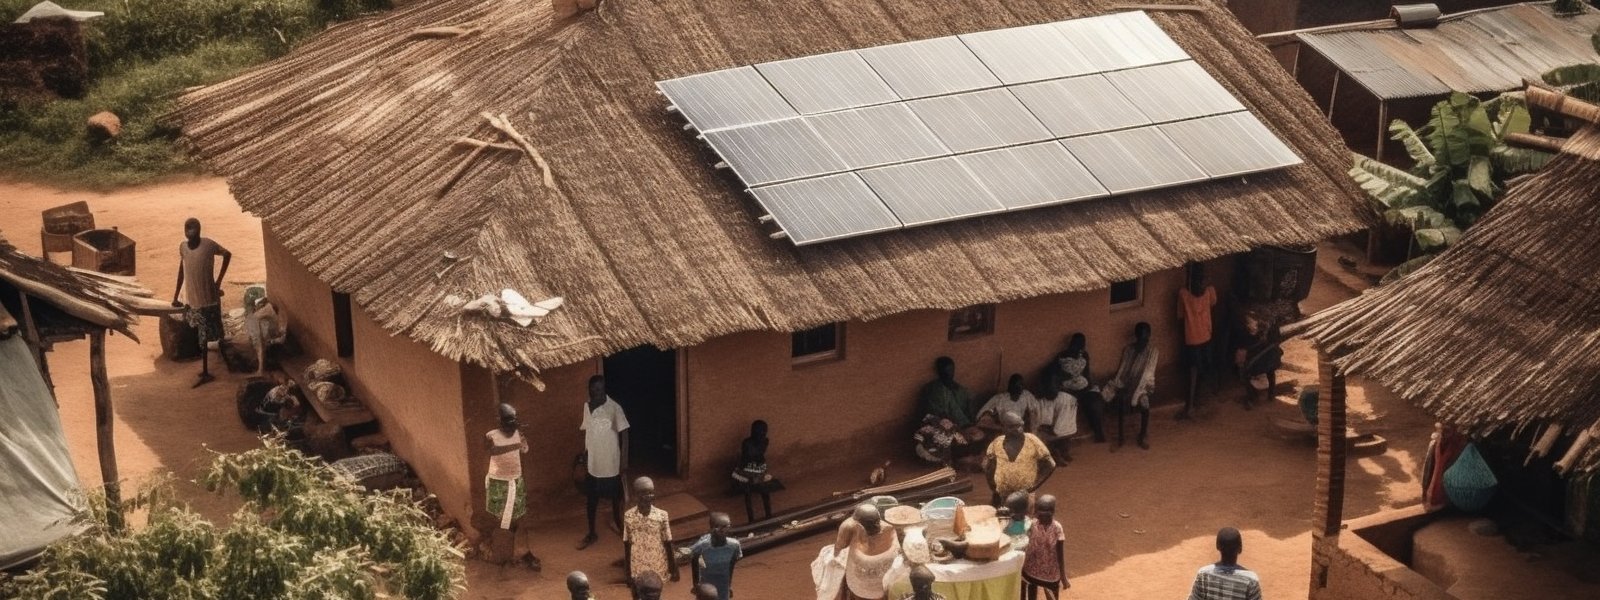 Solar panel on hut in rural Africa